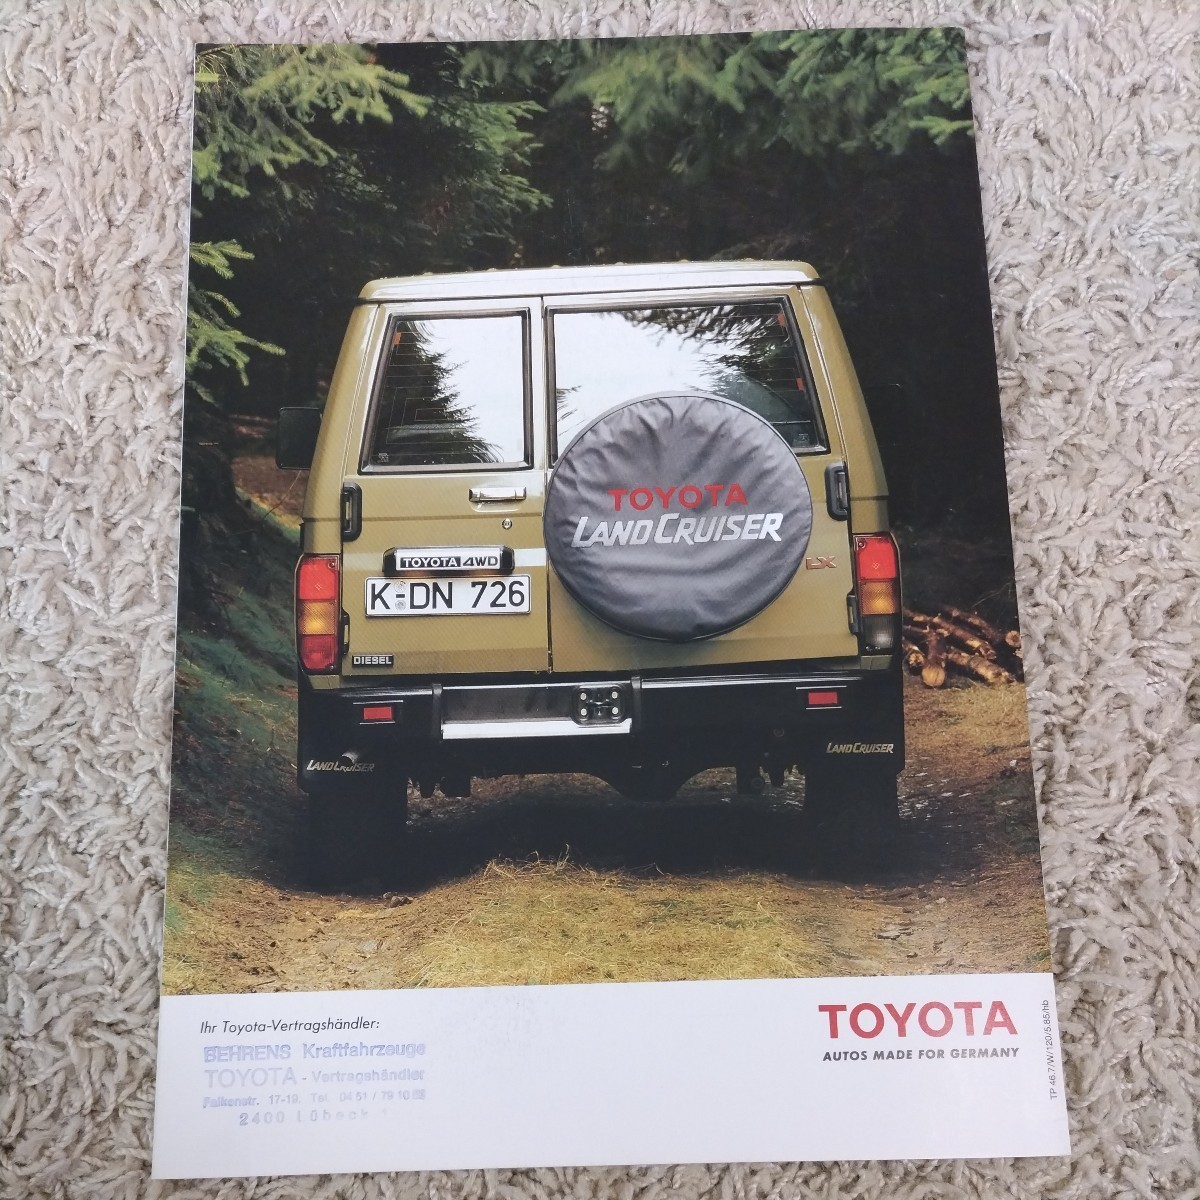  Toyota 60 70 Land Cruiser catalog Germany version 